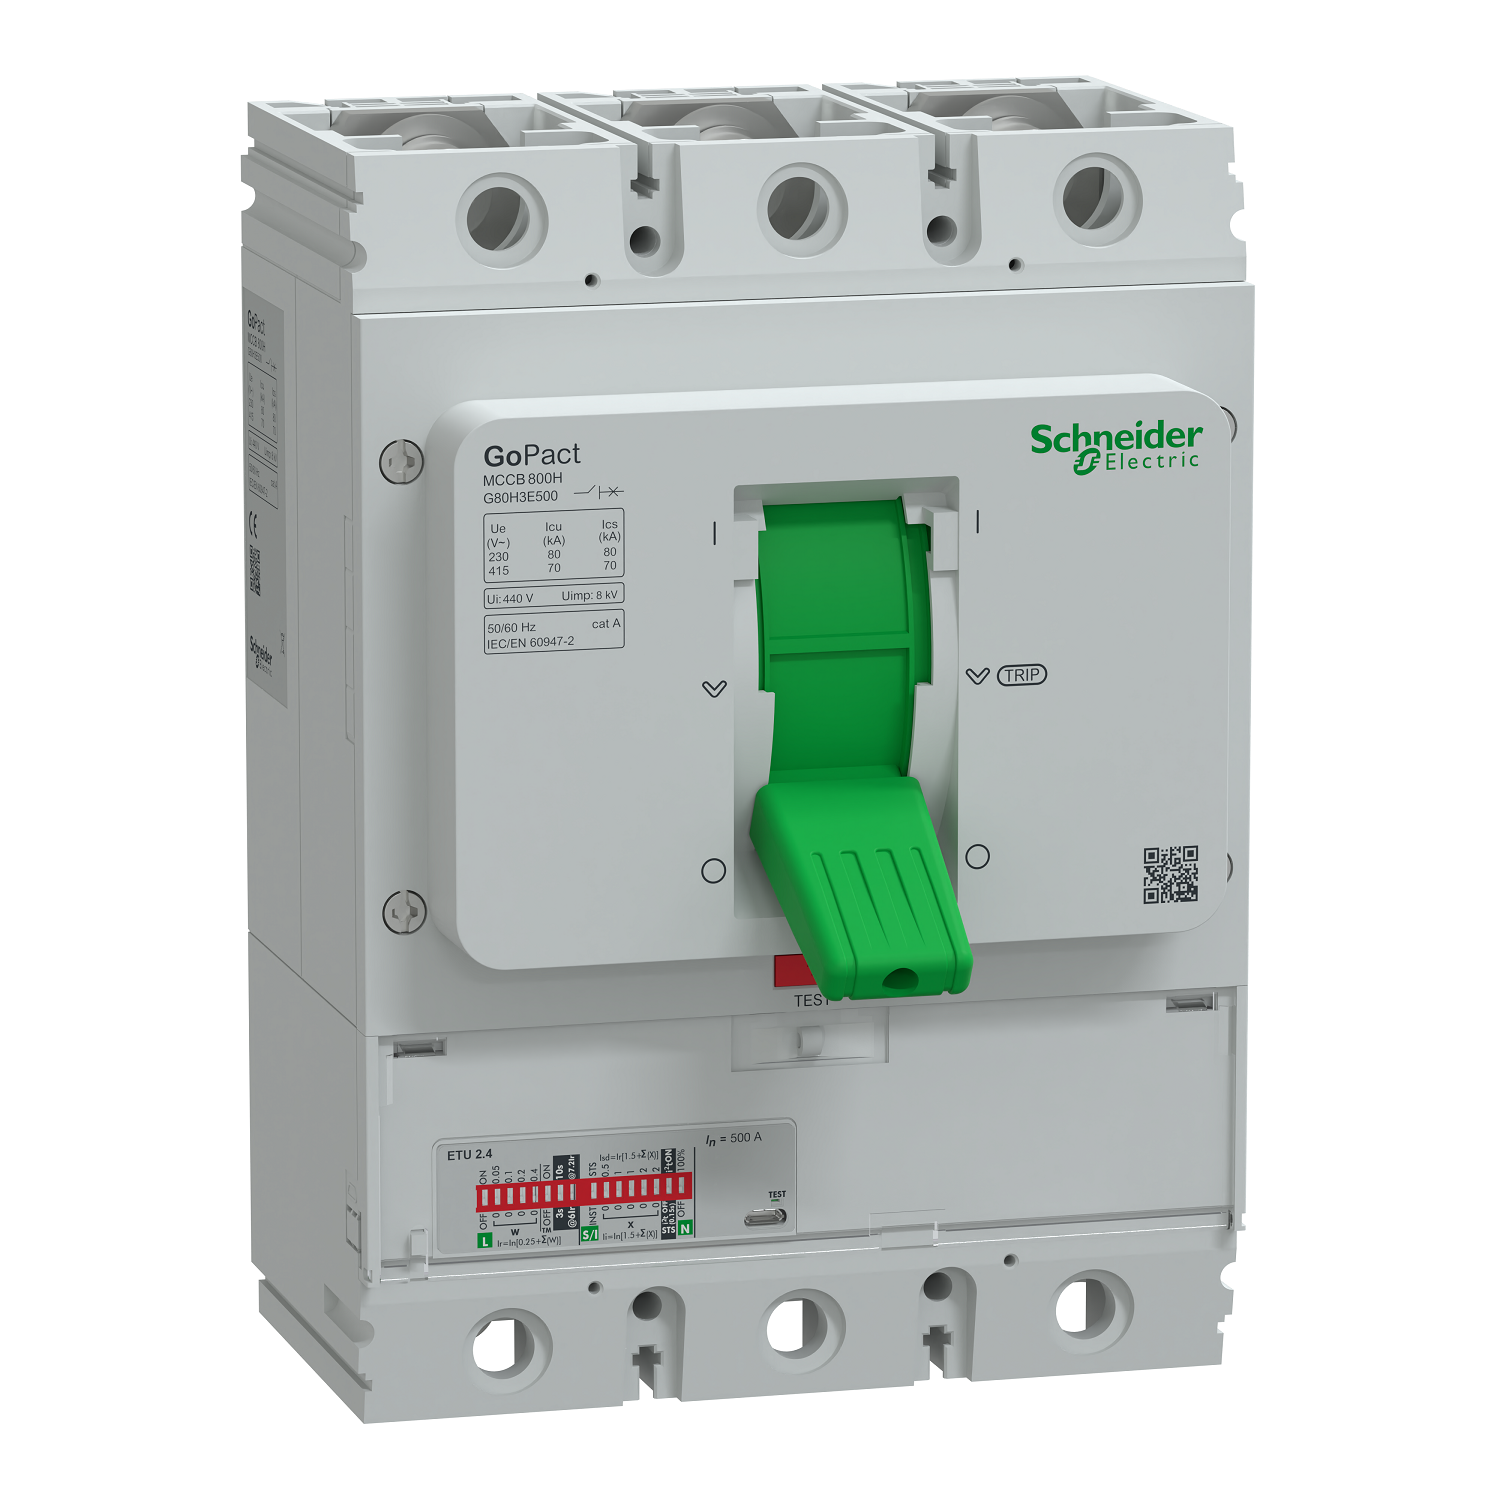 Circuit breaker, GoPact MCCB 800, 3 poles, 70kA at 415VAC, 500A rating, ETU trip unit, adjustable thermal protection